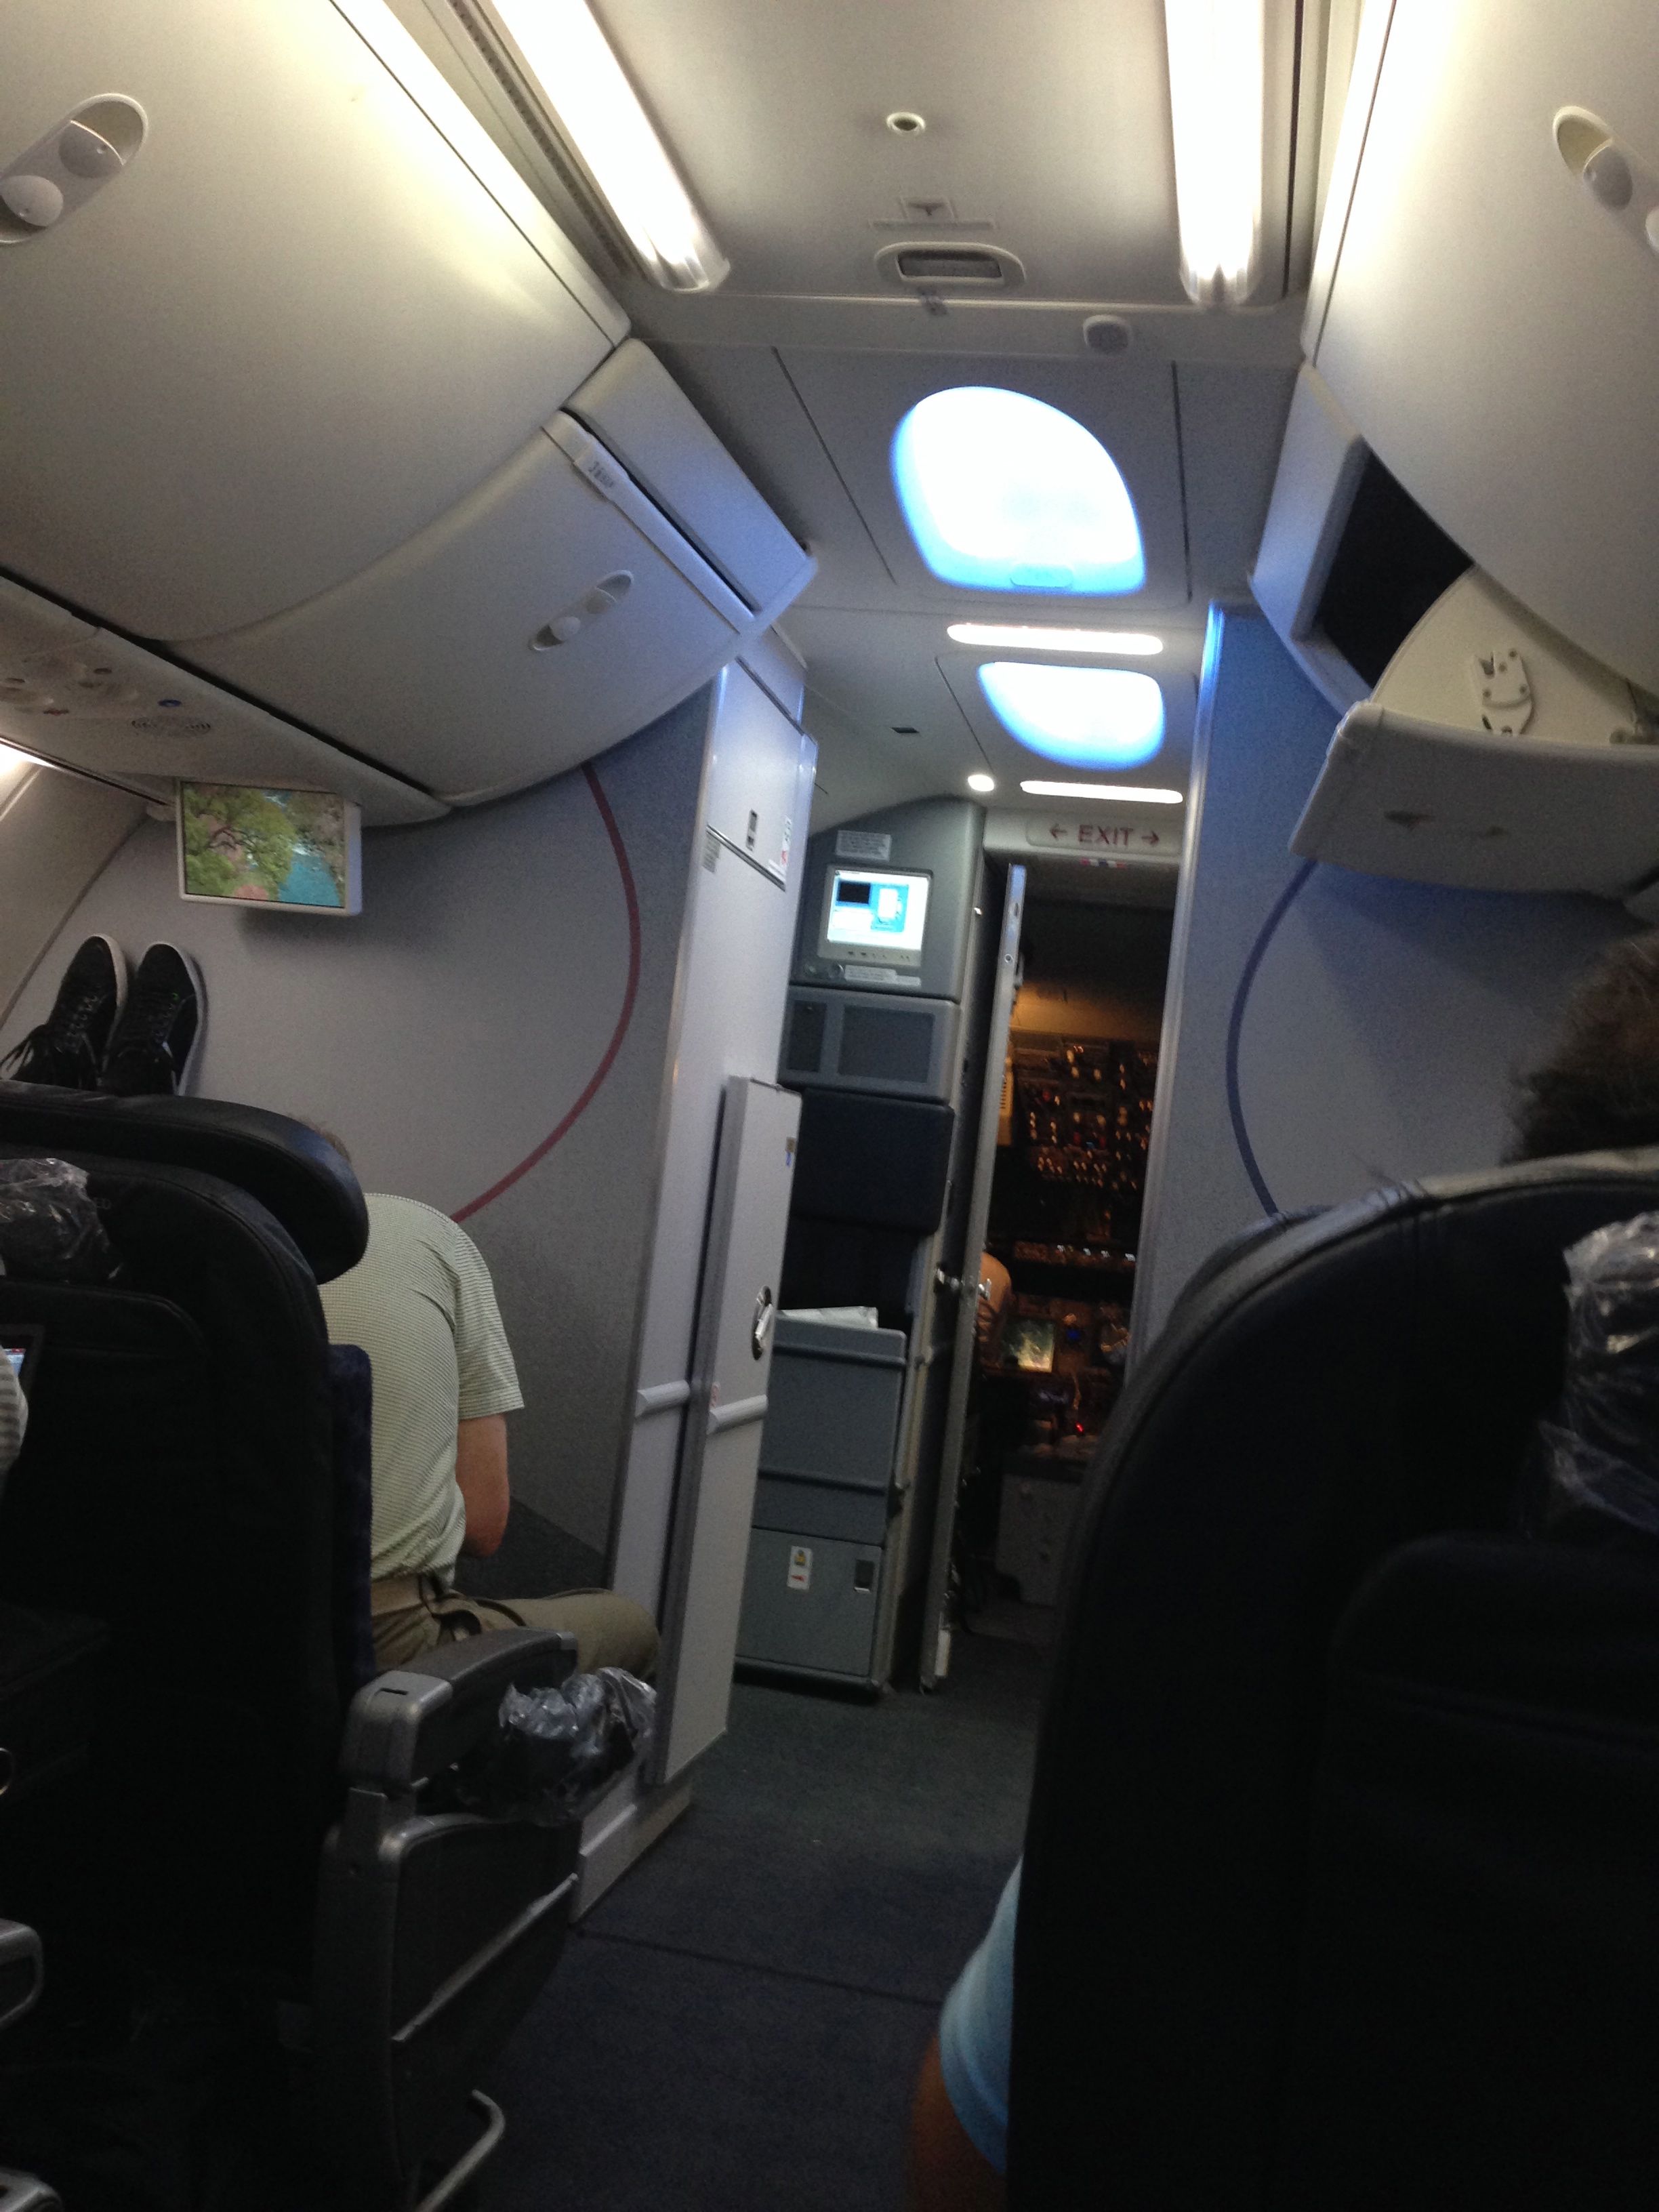 My First Flight On A New Aa 737 800 Sky Interior Impressed